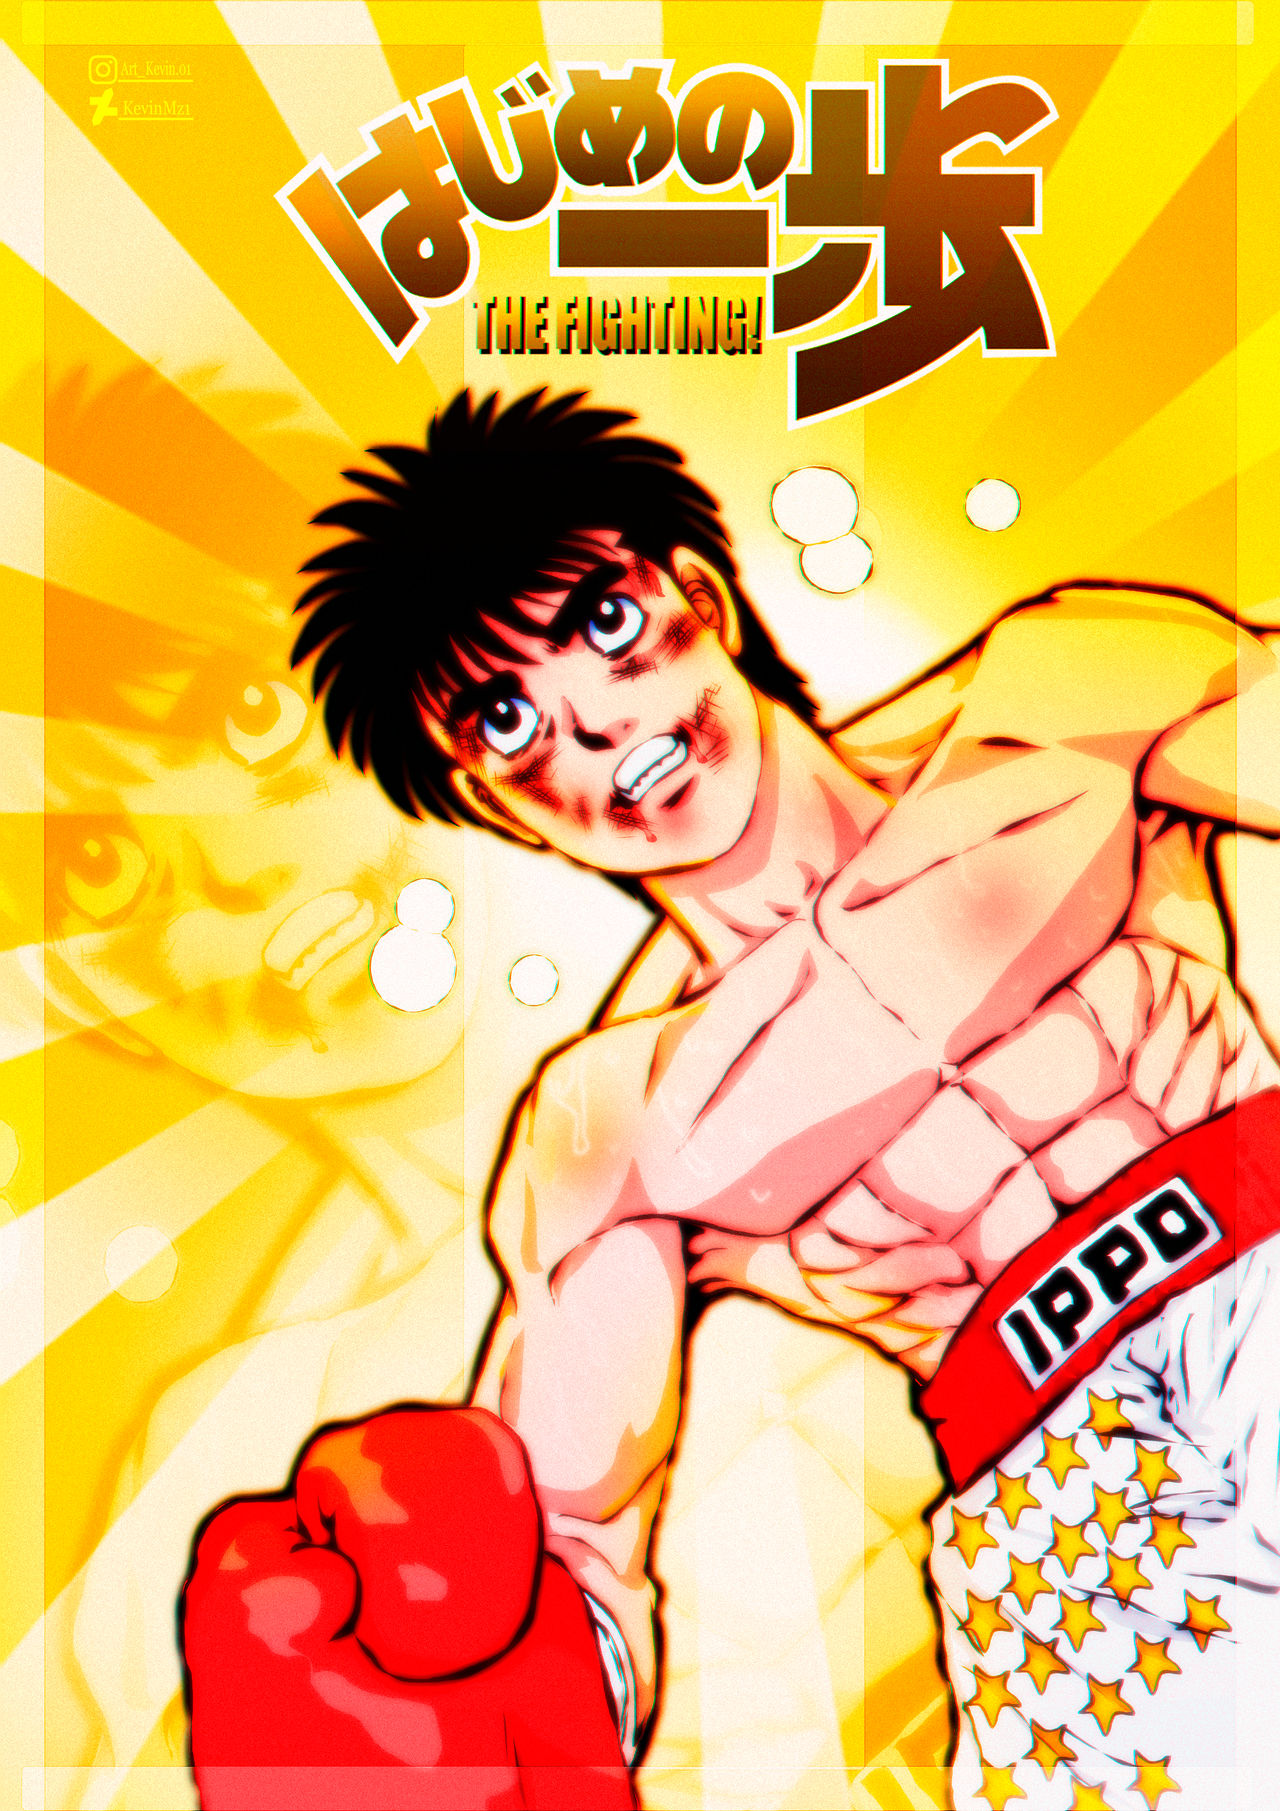 Ippo Makunouchi by Spero-Manga on DeviantArt